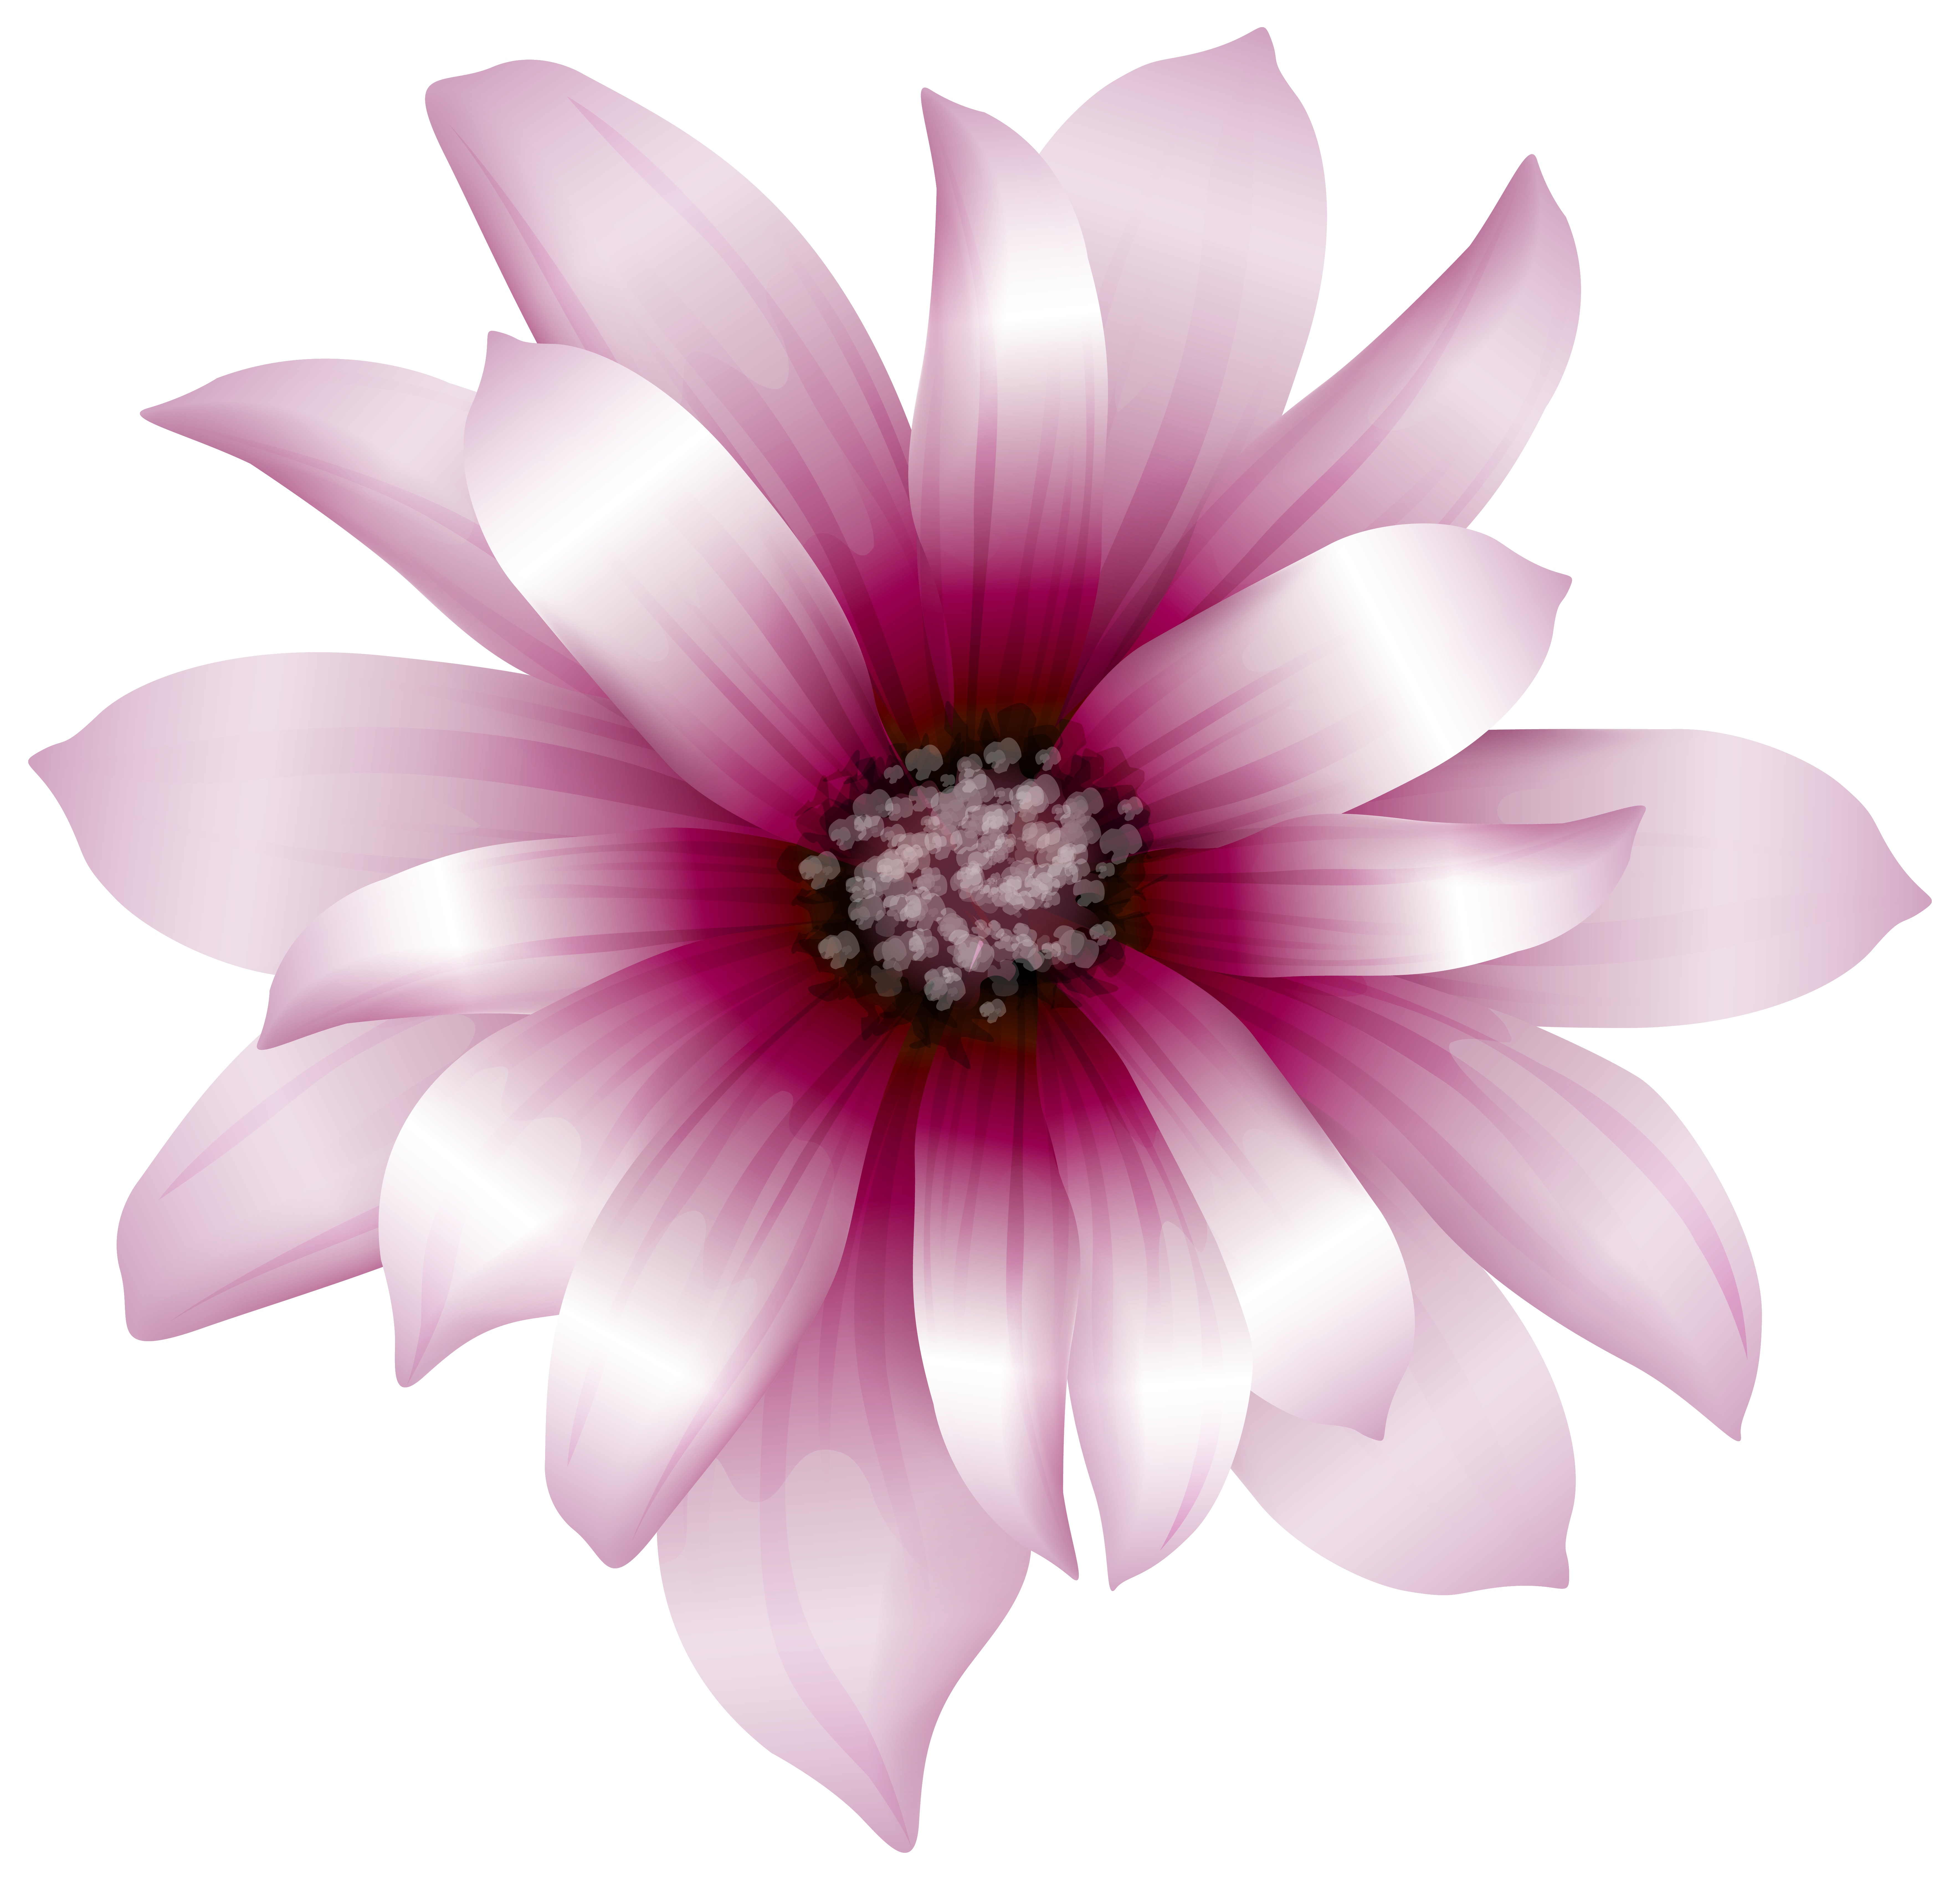 Large Pink Flower Transparent PNG Clip Art Image | Gallery Yopriceville